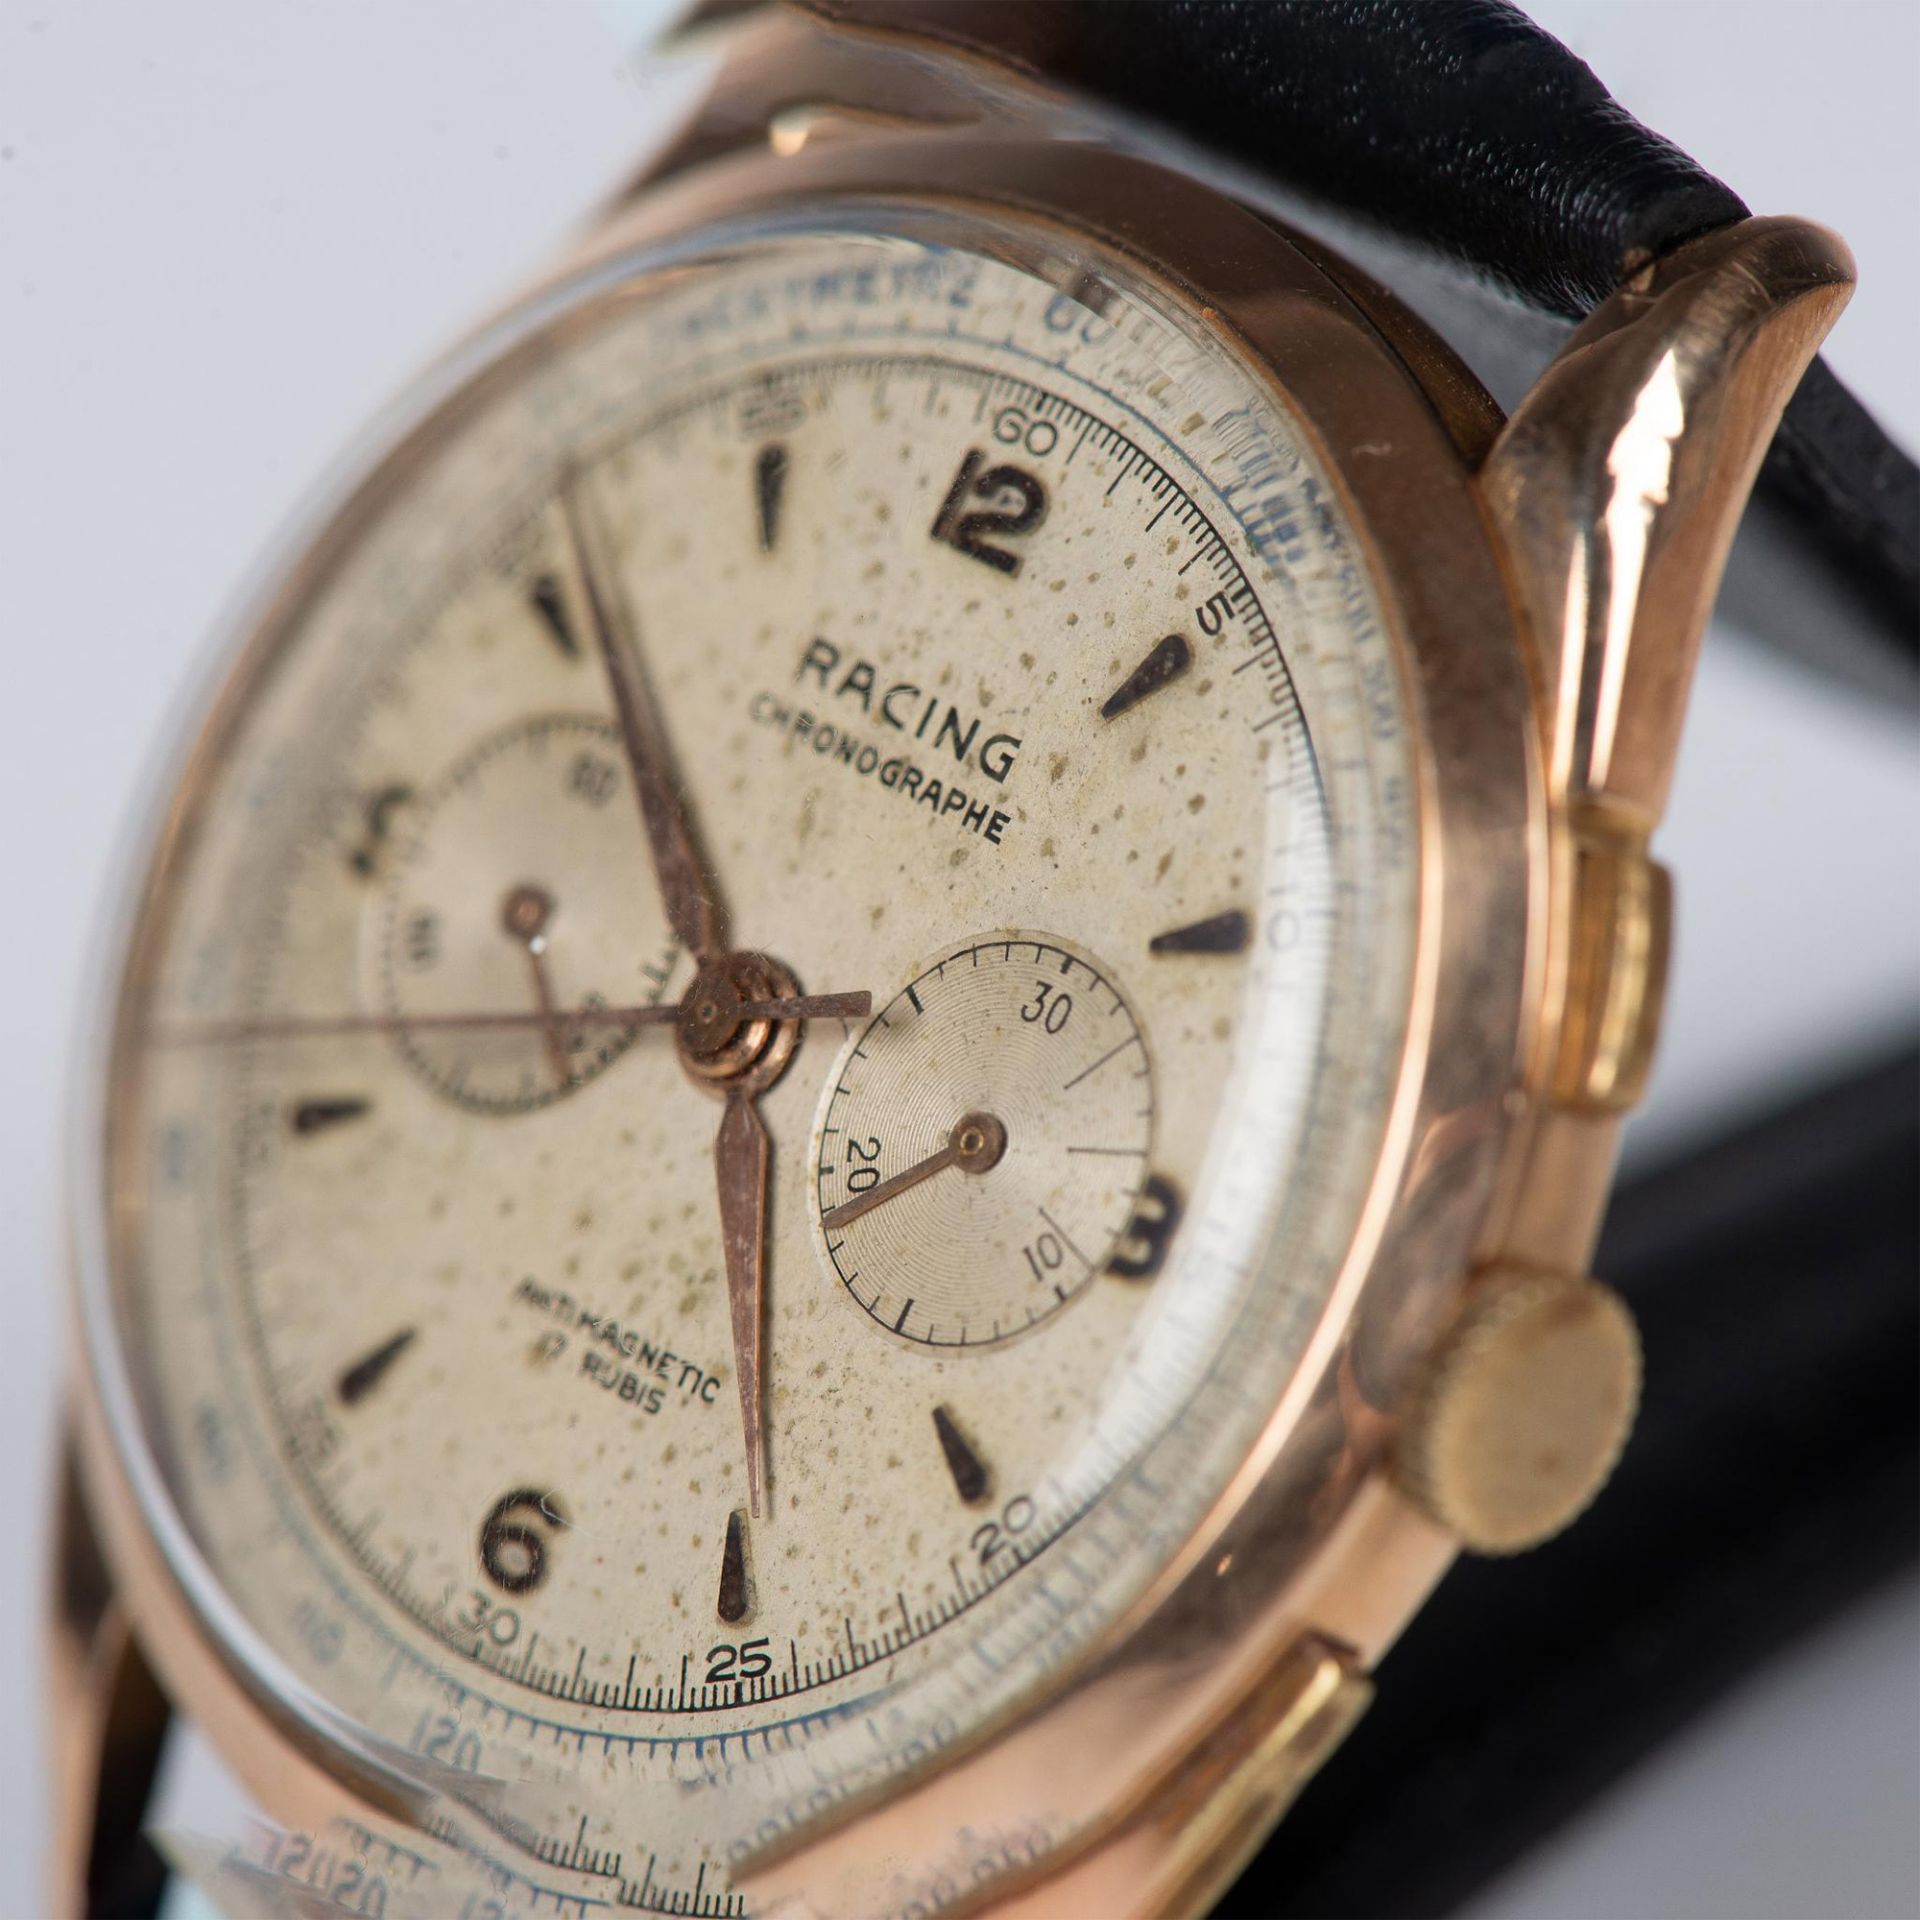 Racing Chronograph 18K Gold Men's Wrist Watch - Image 5 of 11